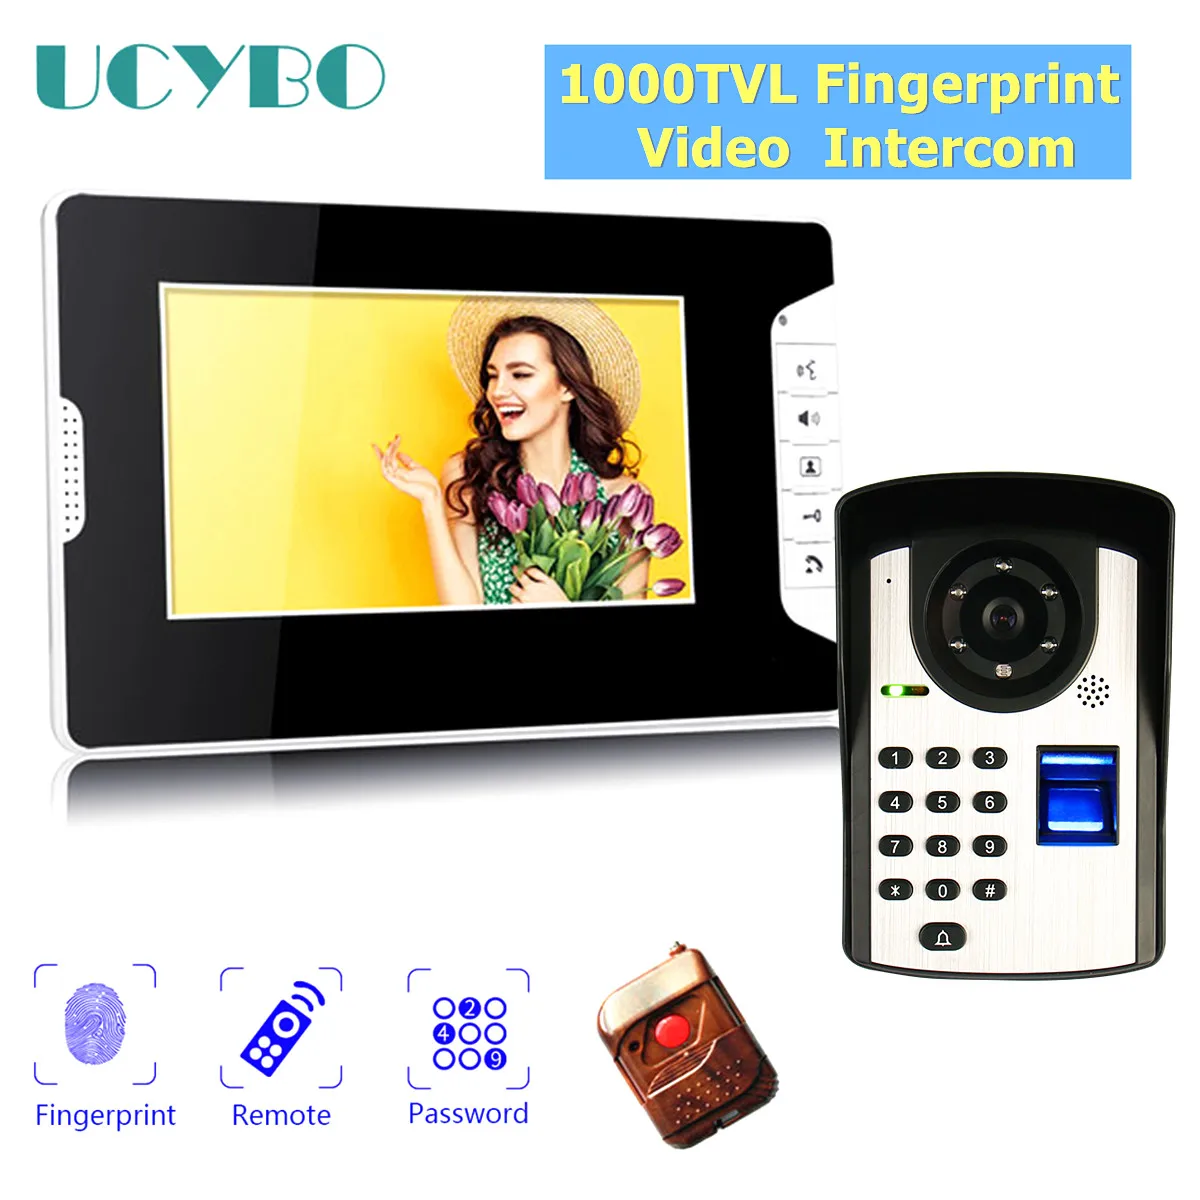 Video intercom home security video door phone fingerprint 7 inch doorbell camera remote password unlock Access Control System